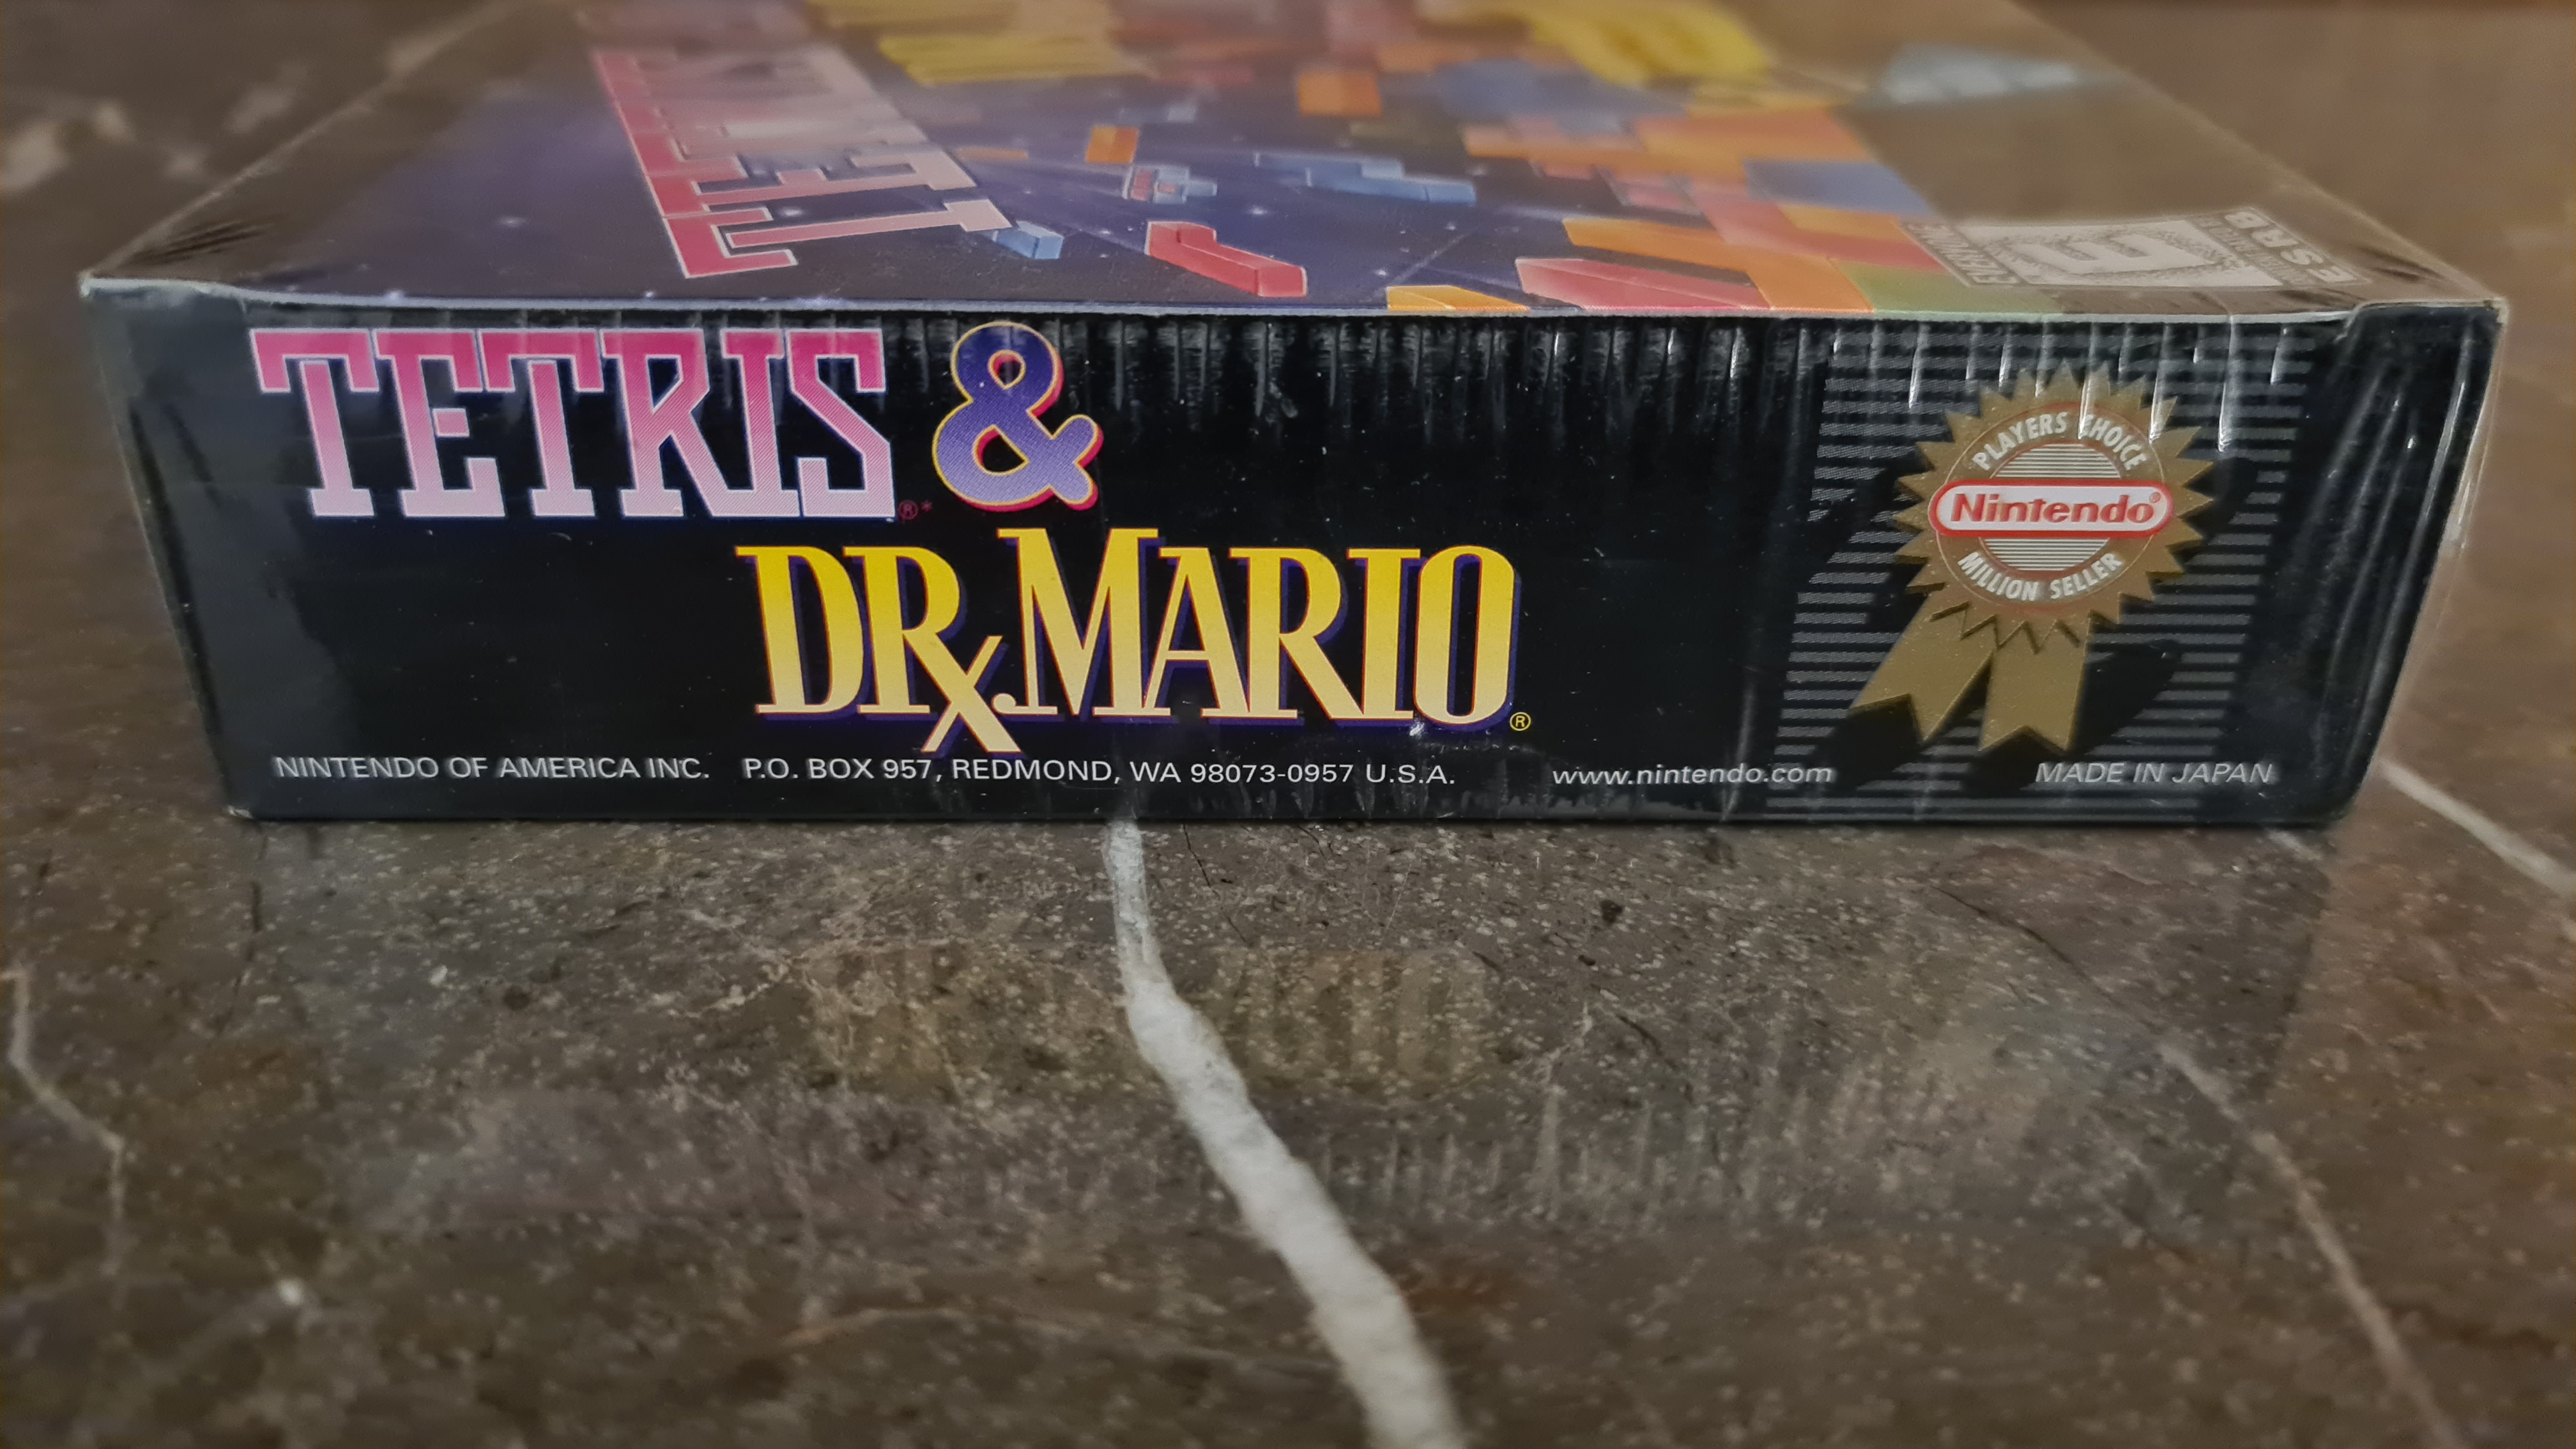 Tetris & Dr. Mario (Super Nintendo)